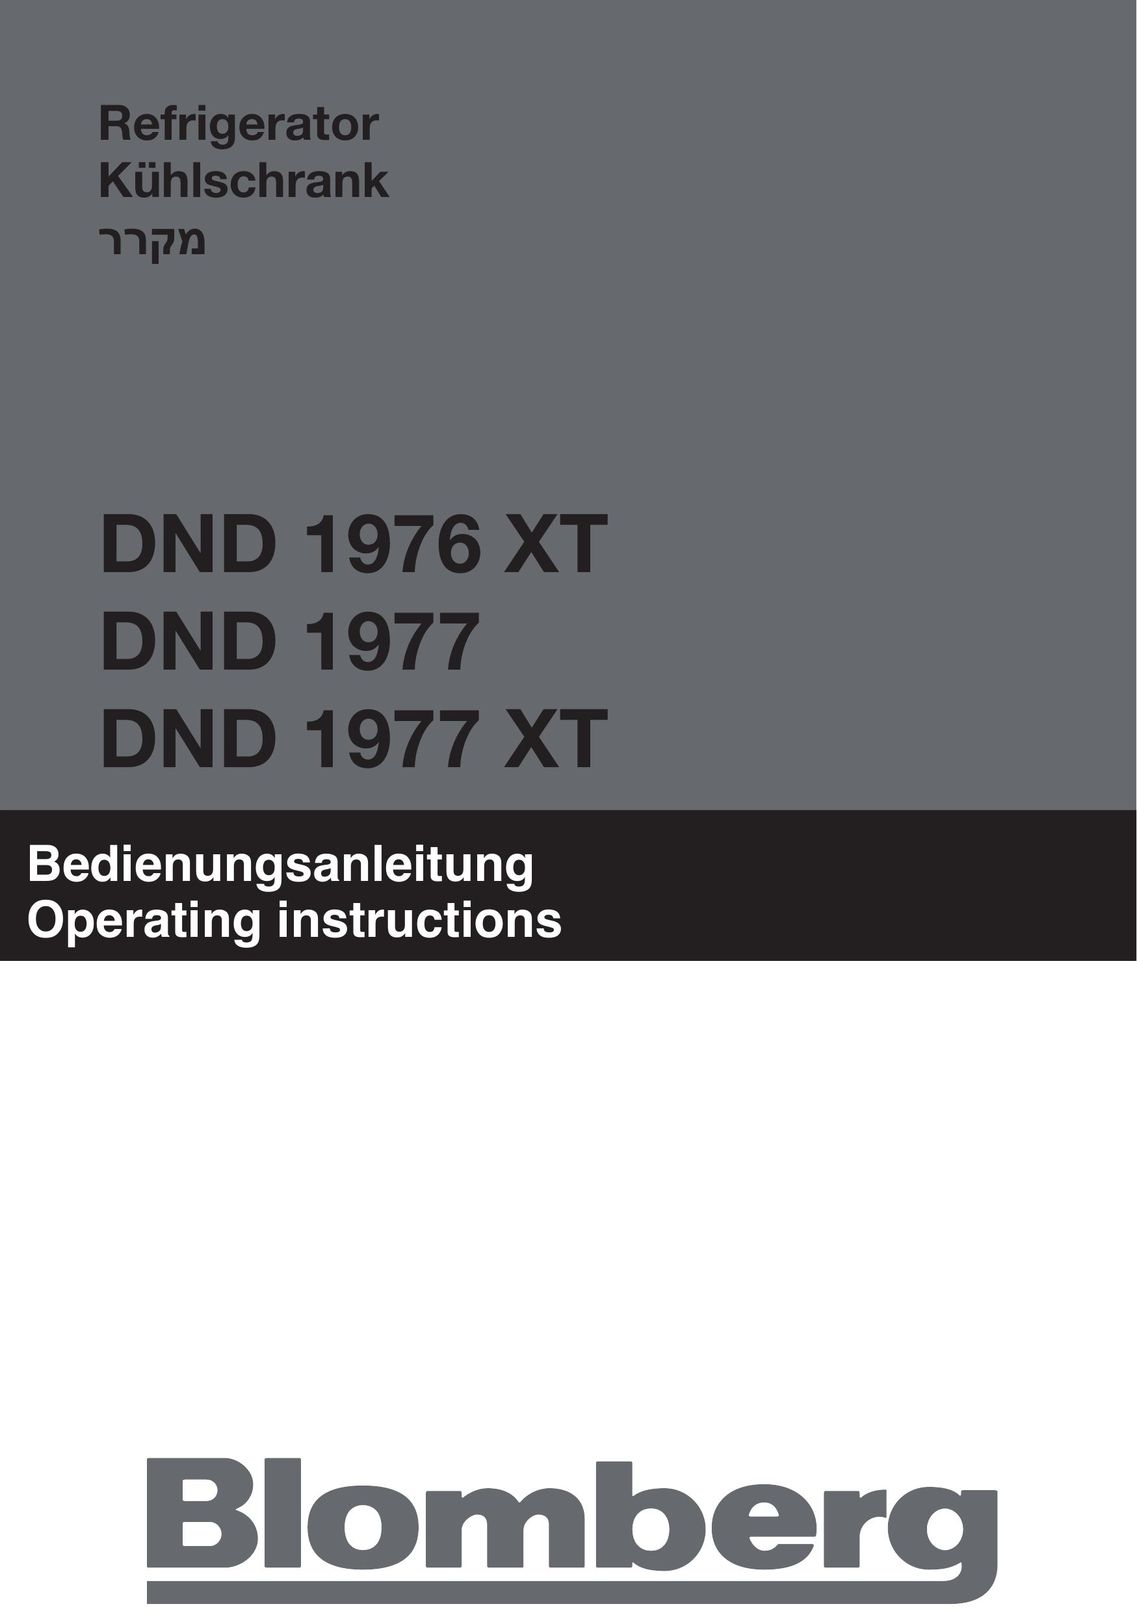 Blomberg DND 1976 XT Ice Maker User Manual